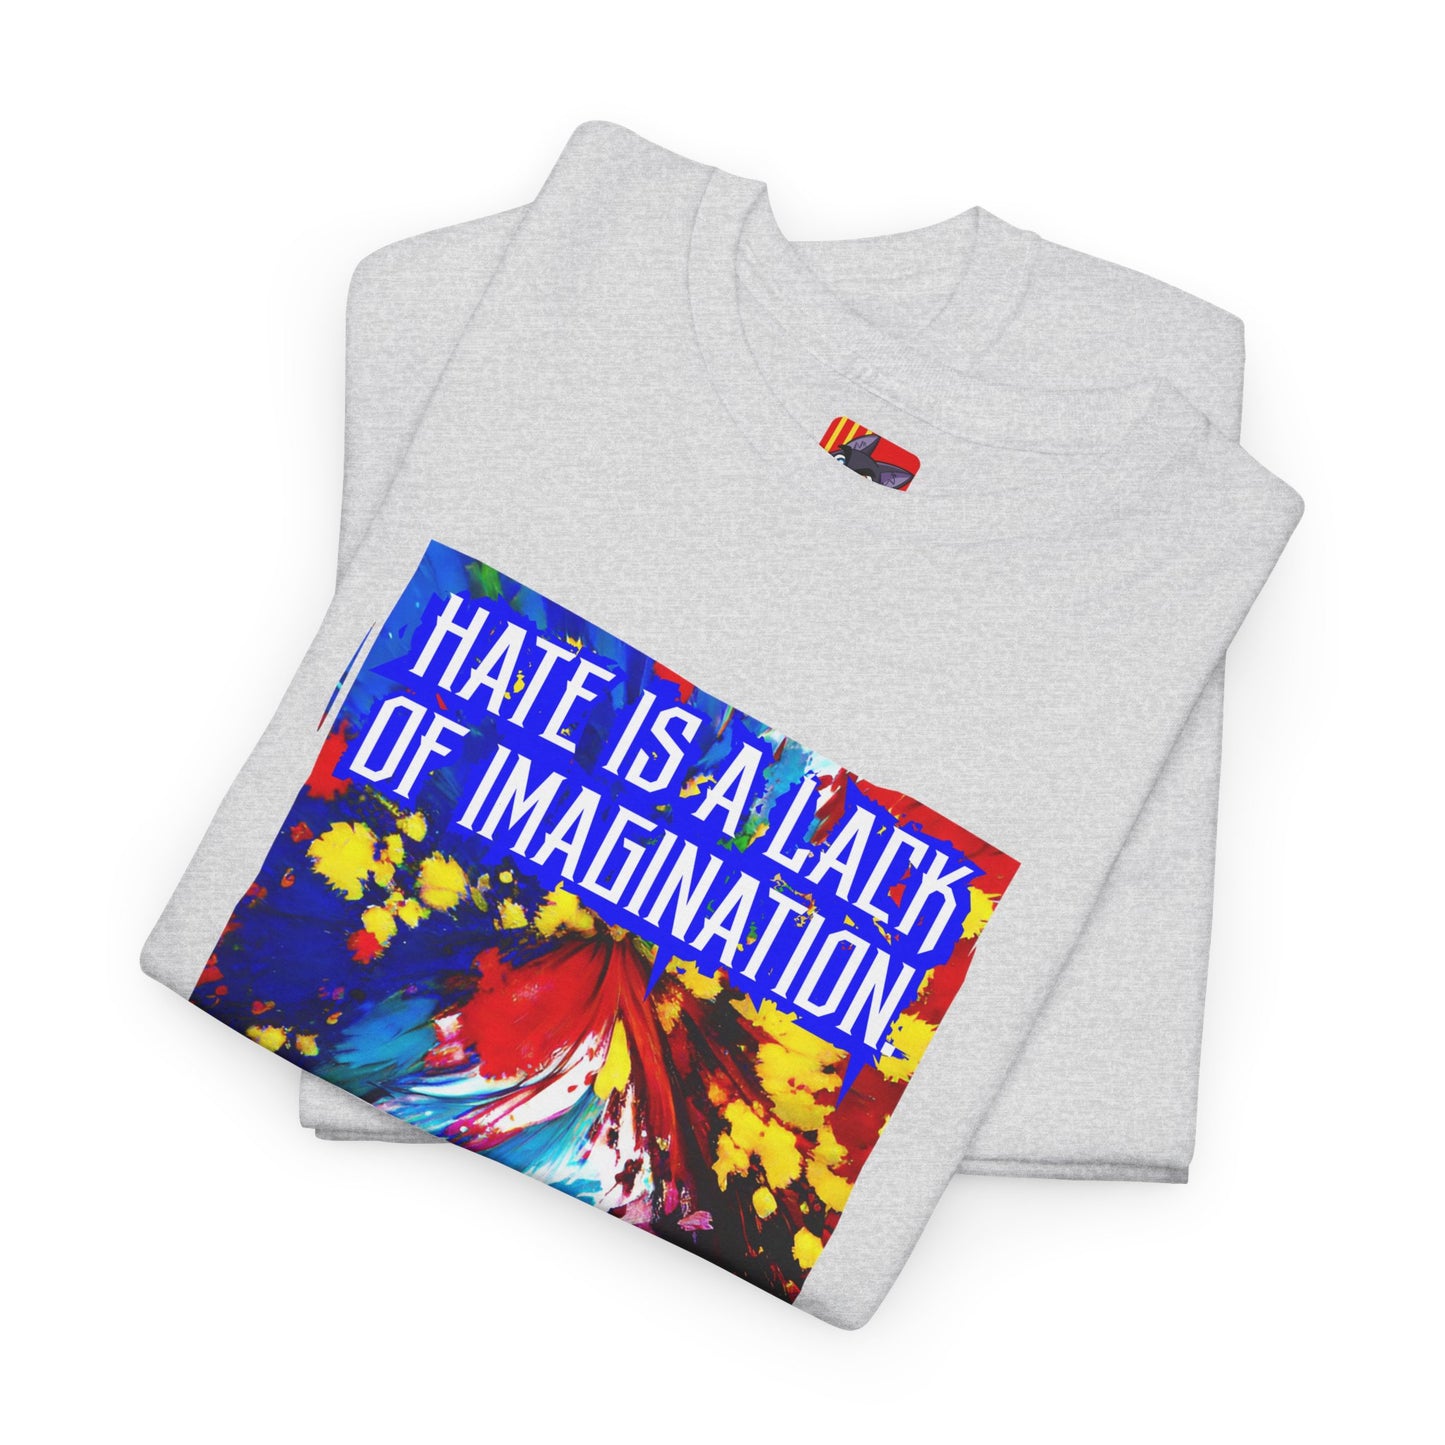 Imaginative Hate T-shirt